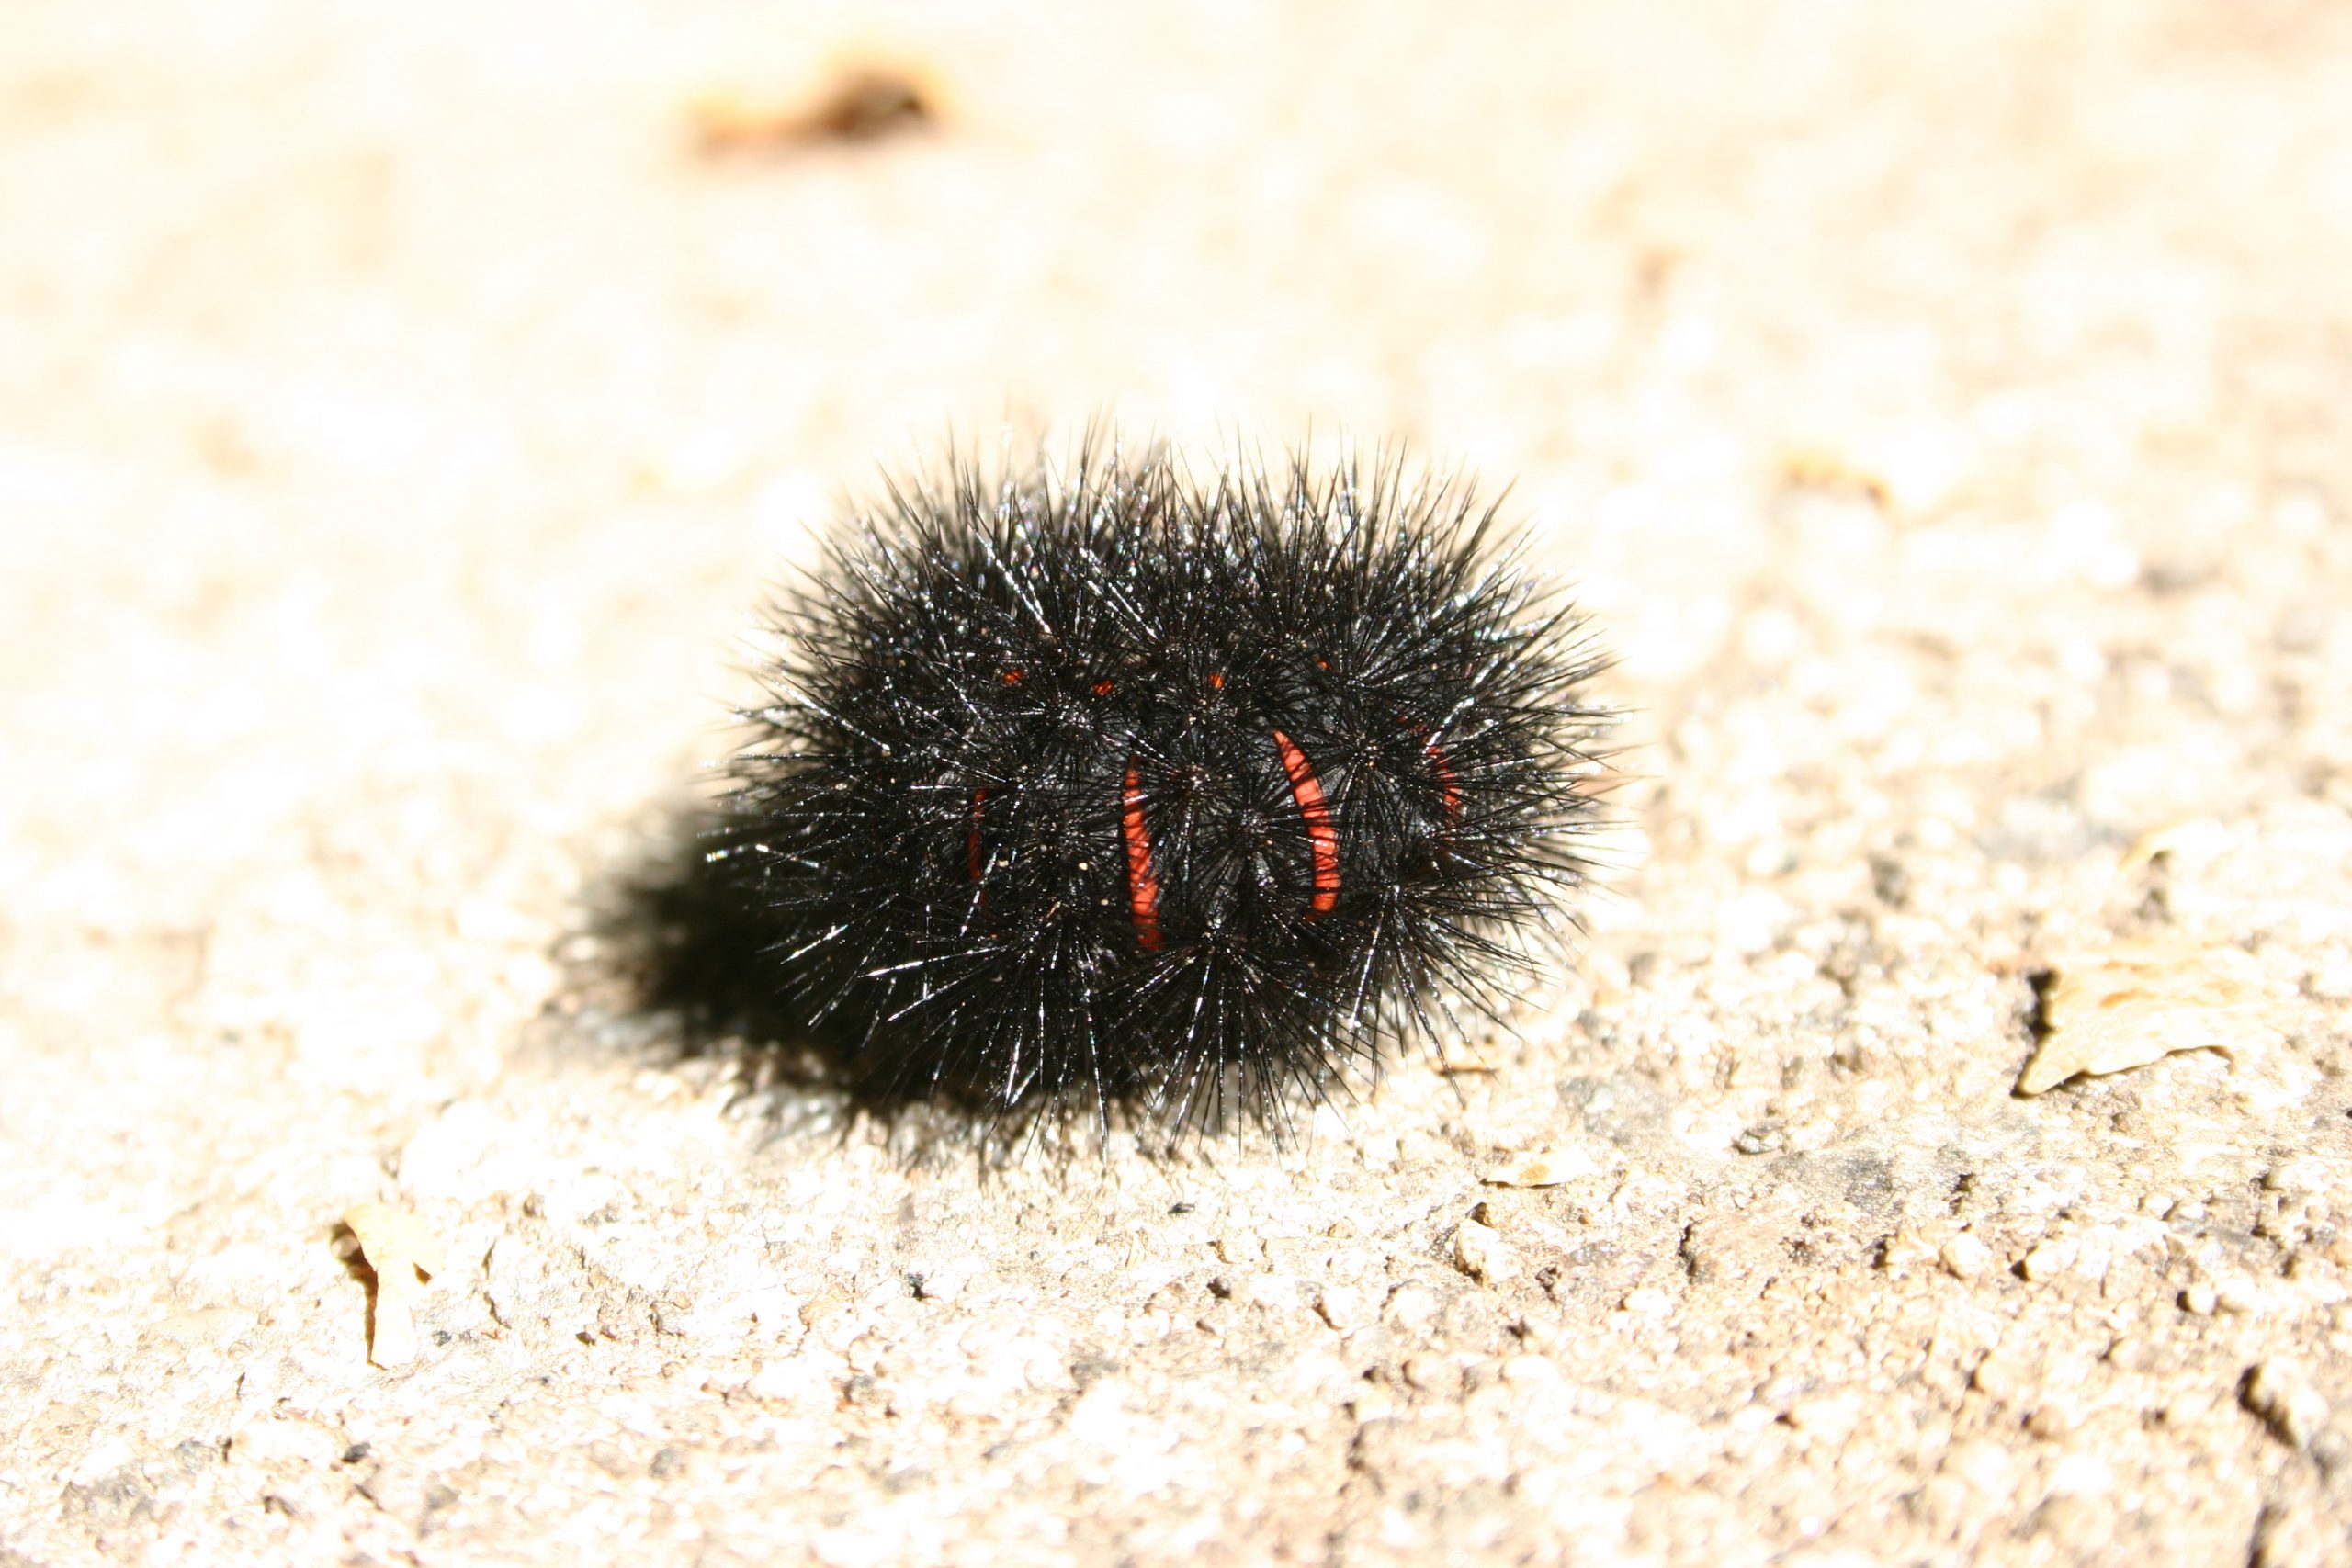 fuzzy black caterpillar